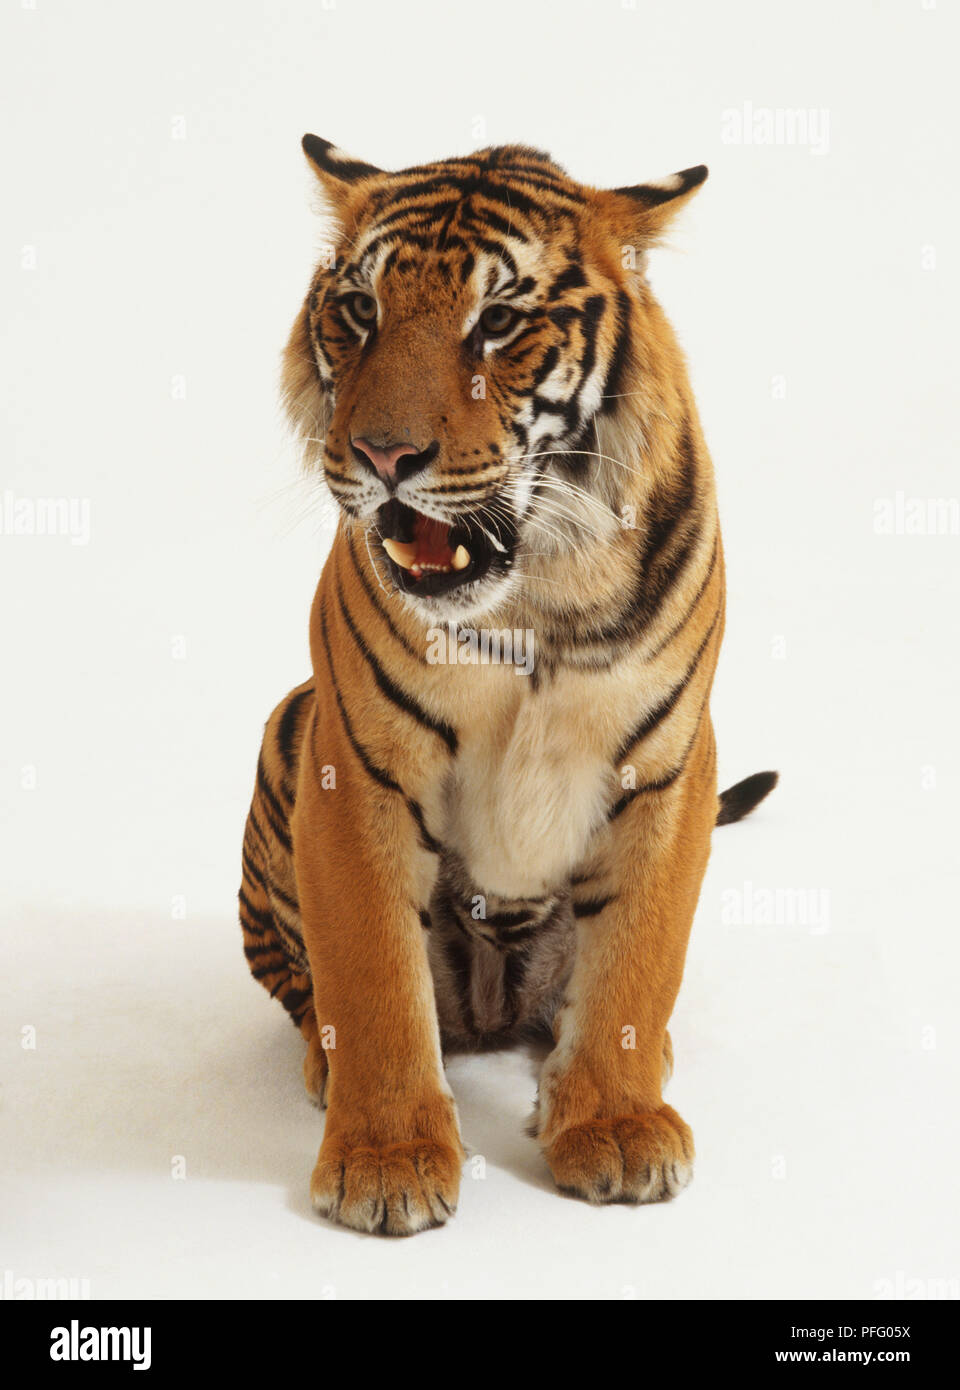 Sitting Tiger (Panthera tigris) baring its teeth, front view Stock Photo